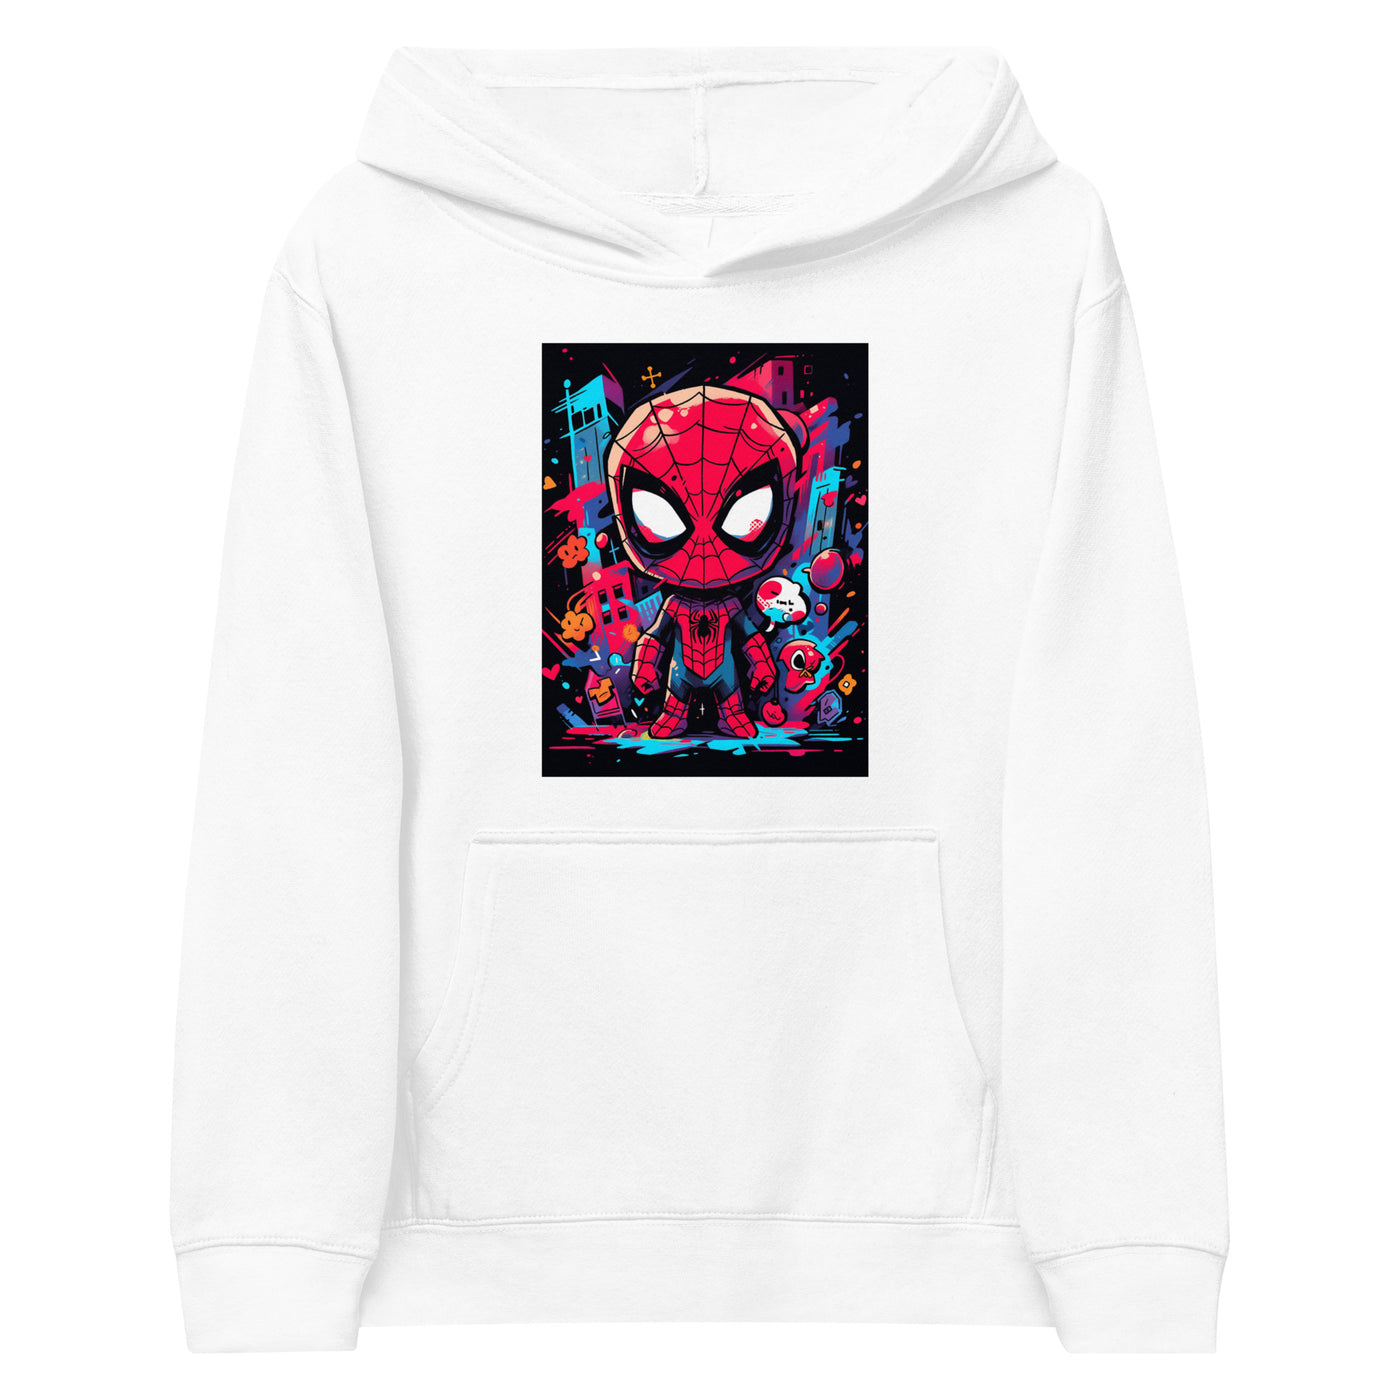 Spider-Man Kids fleece hoodie S-XL Unisex - Coco Potato - dresses and partywear for little girls